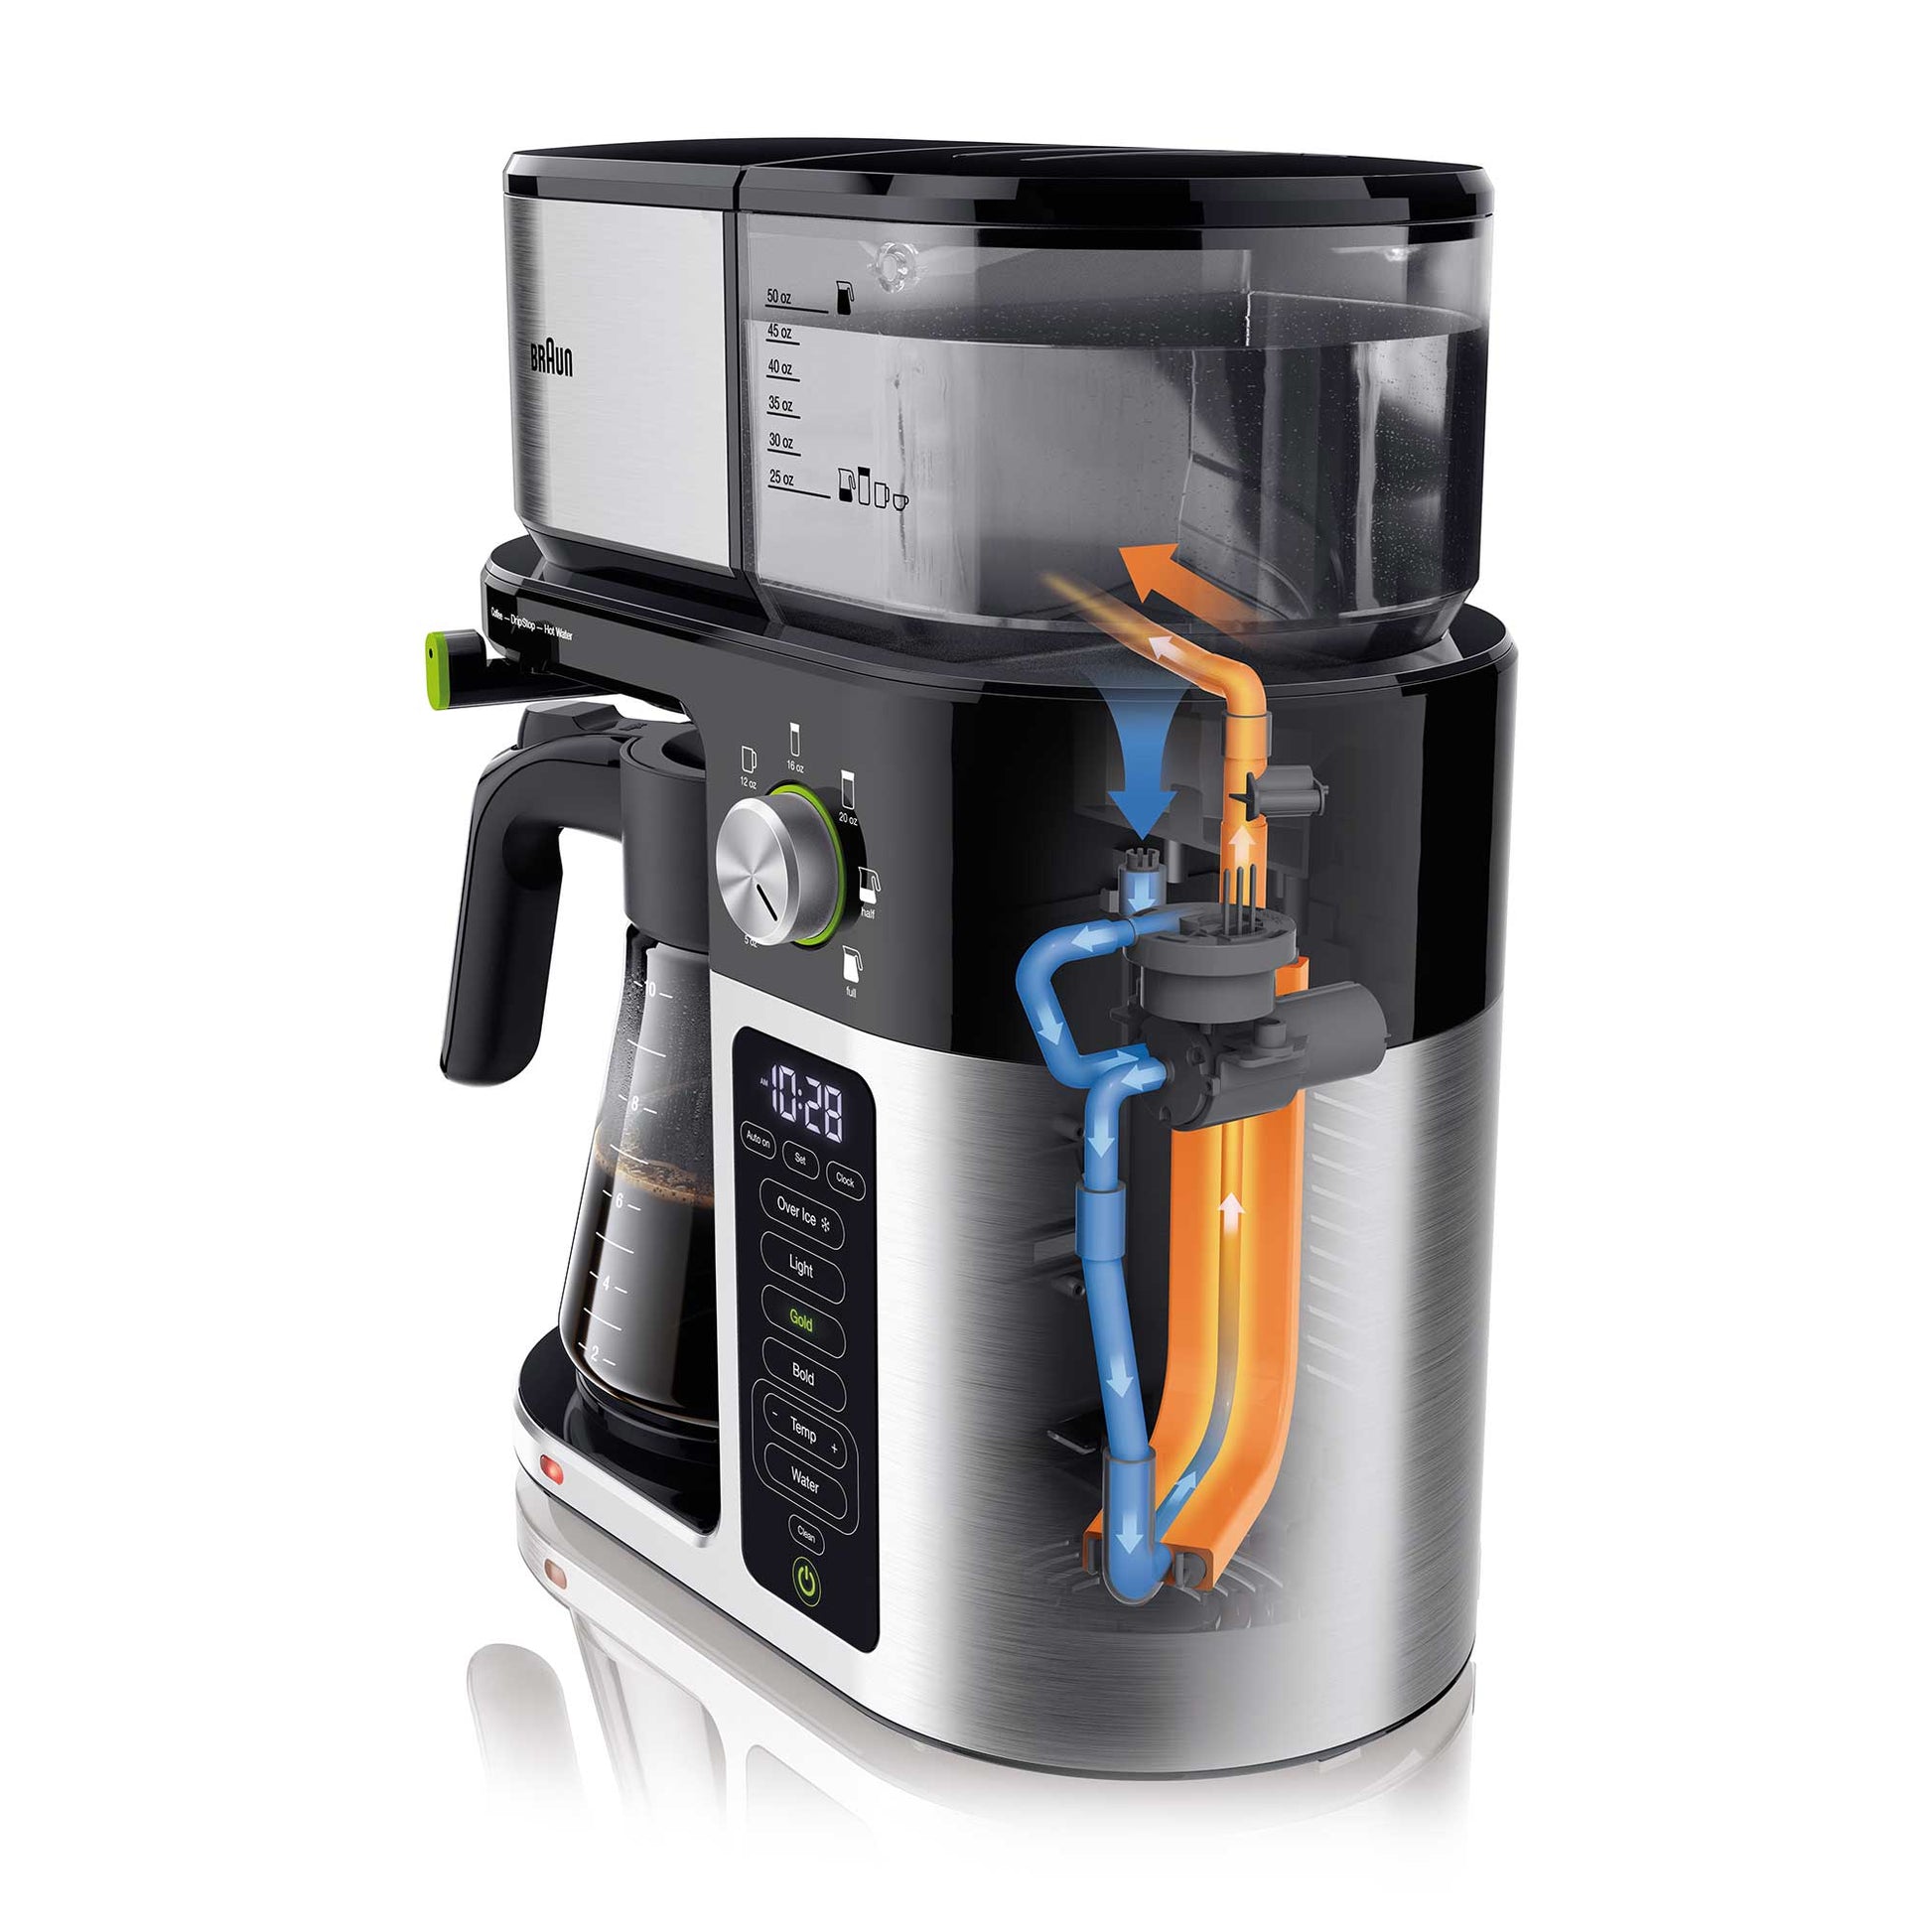 MultiServe Coffee Machine - Stainless Steel, Braun